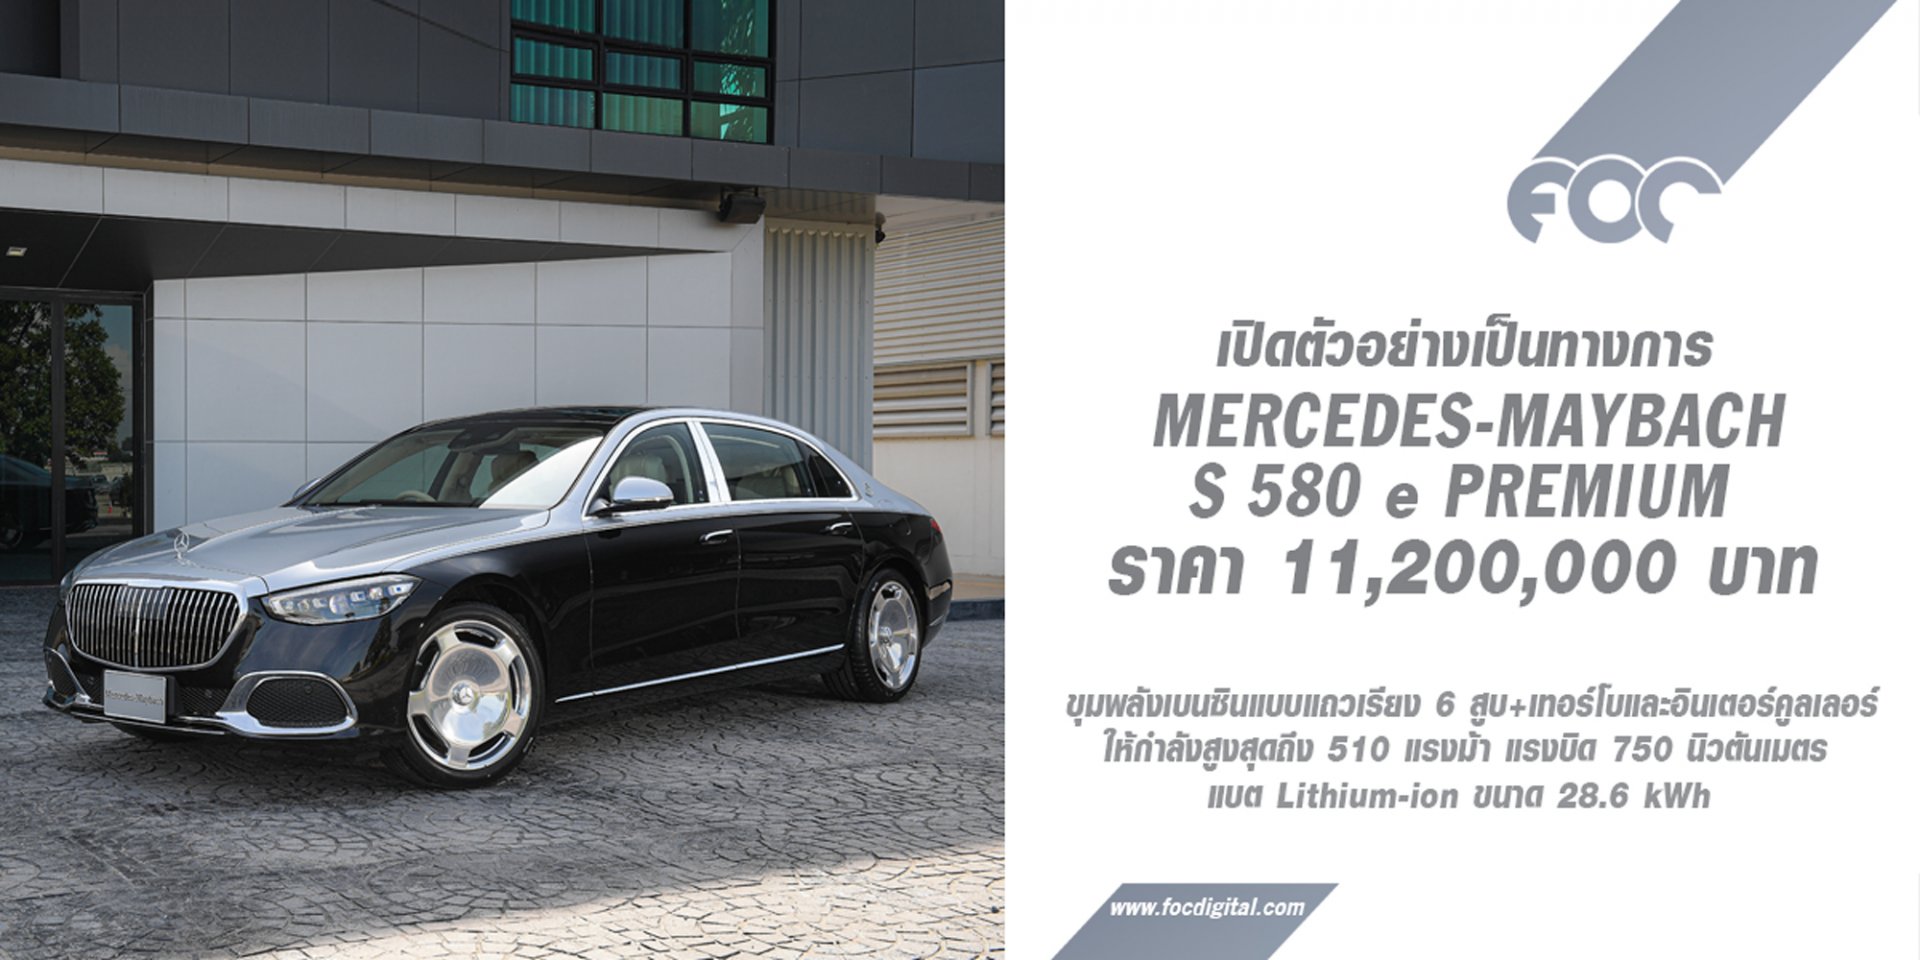 Mercedes-Maybach S 580 e Premium รุ่นประกอบในประเทศไทย เคาะราคา 